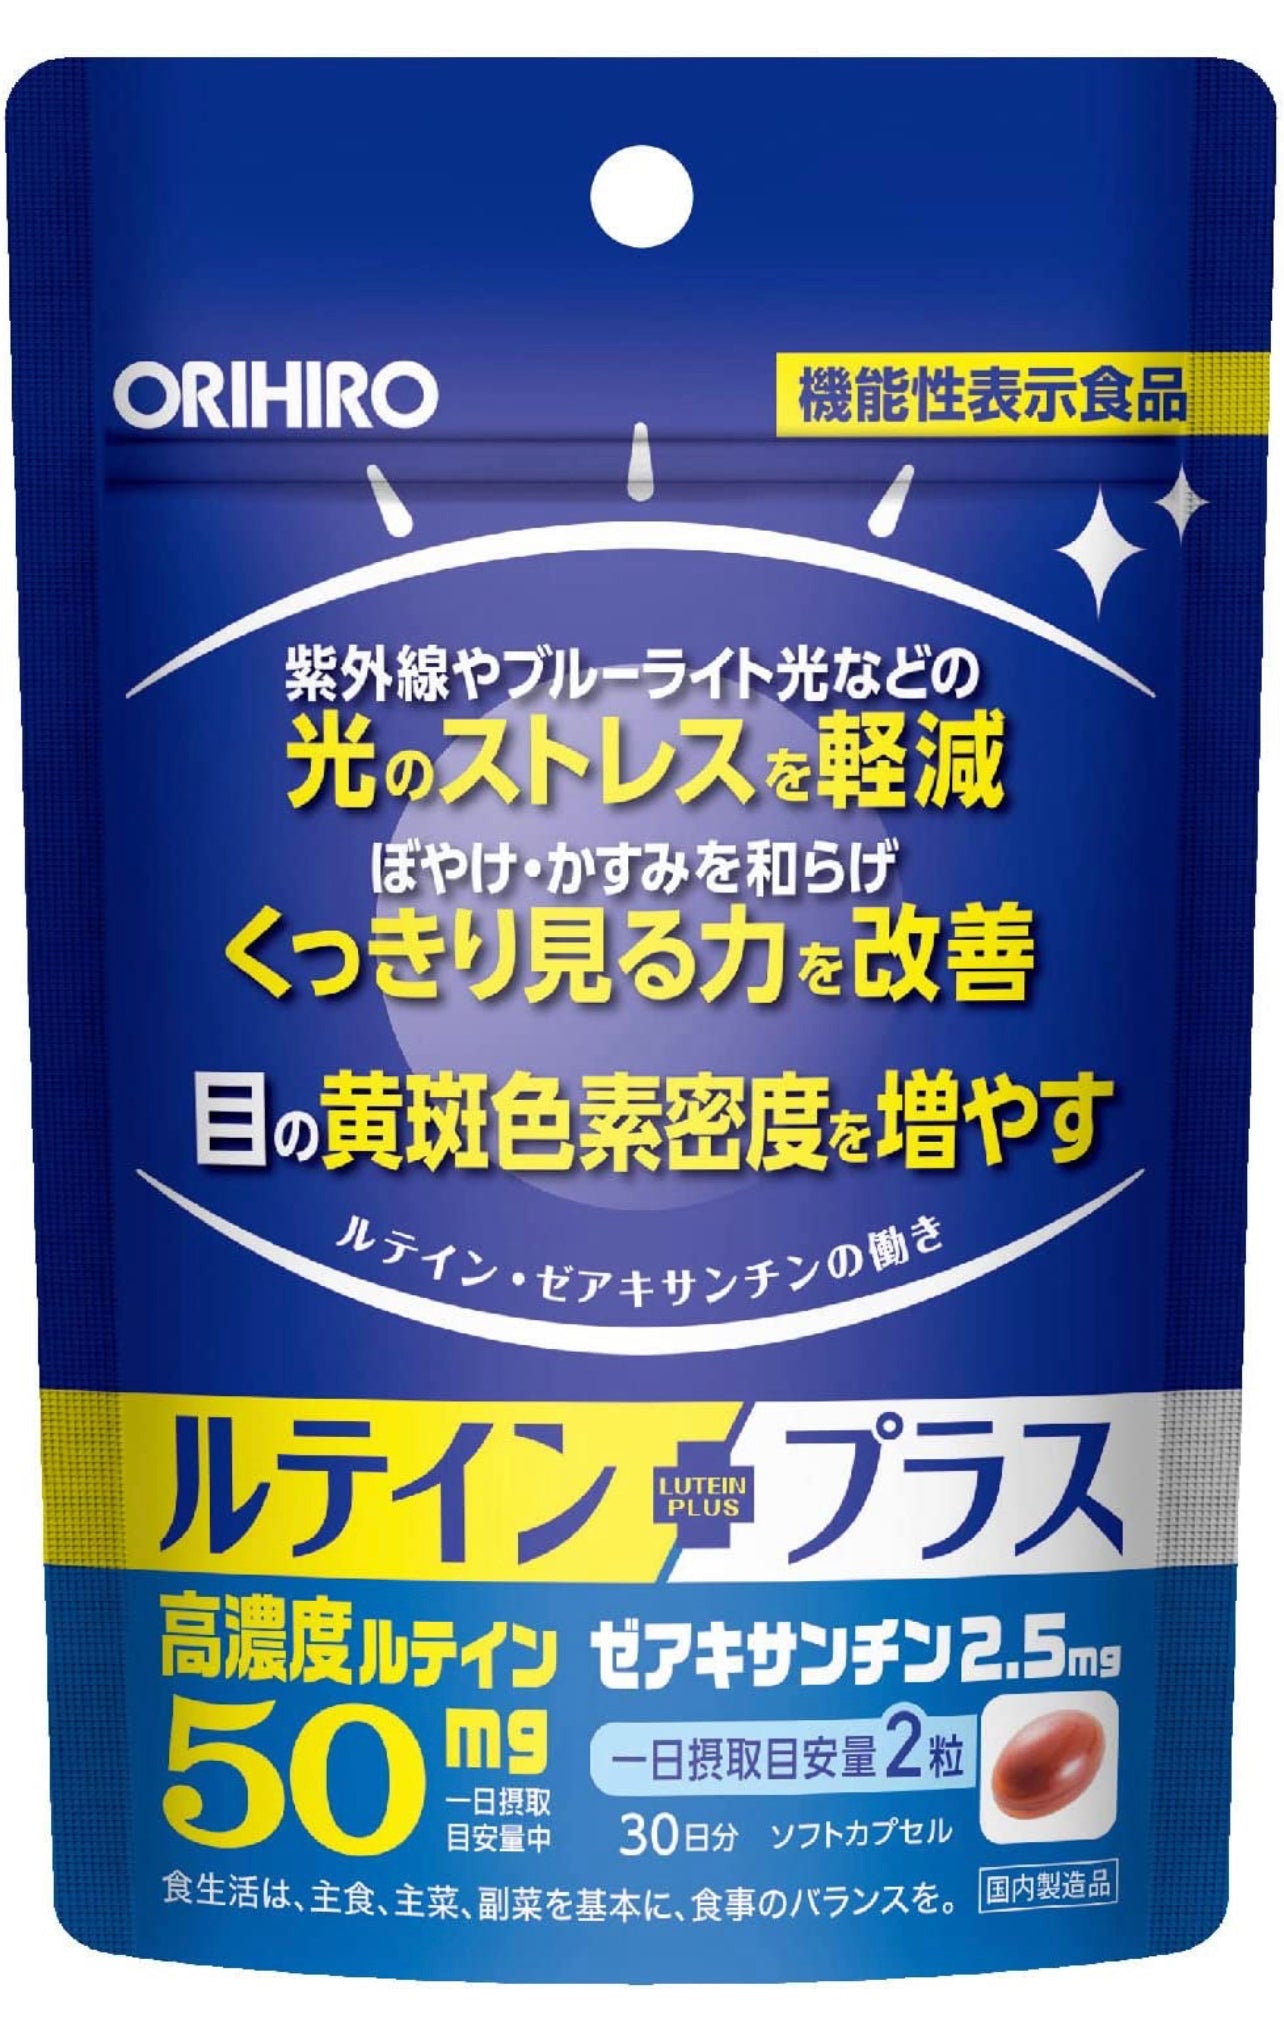 Orihiro Lutein Plus 30 days